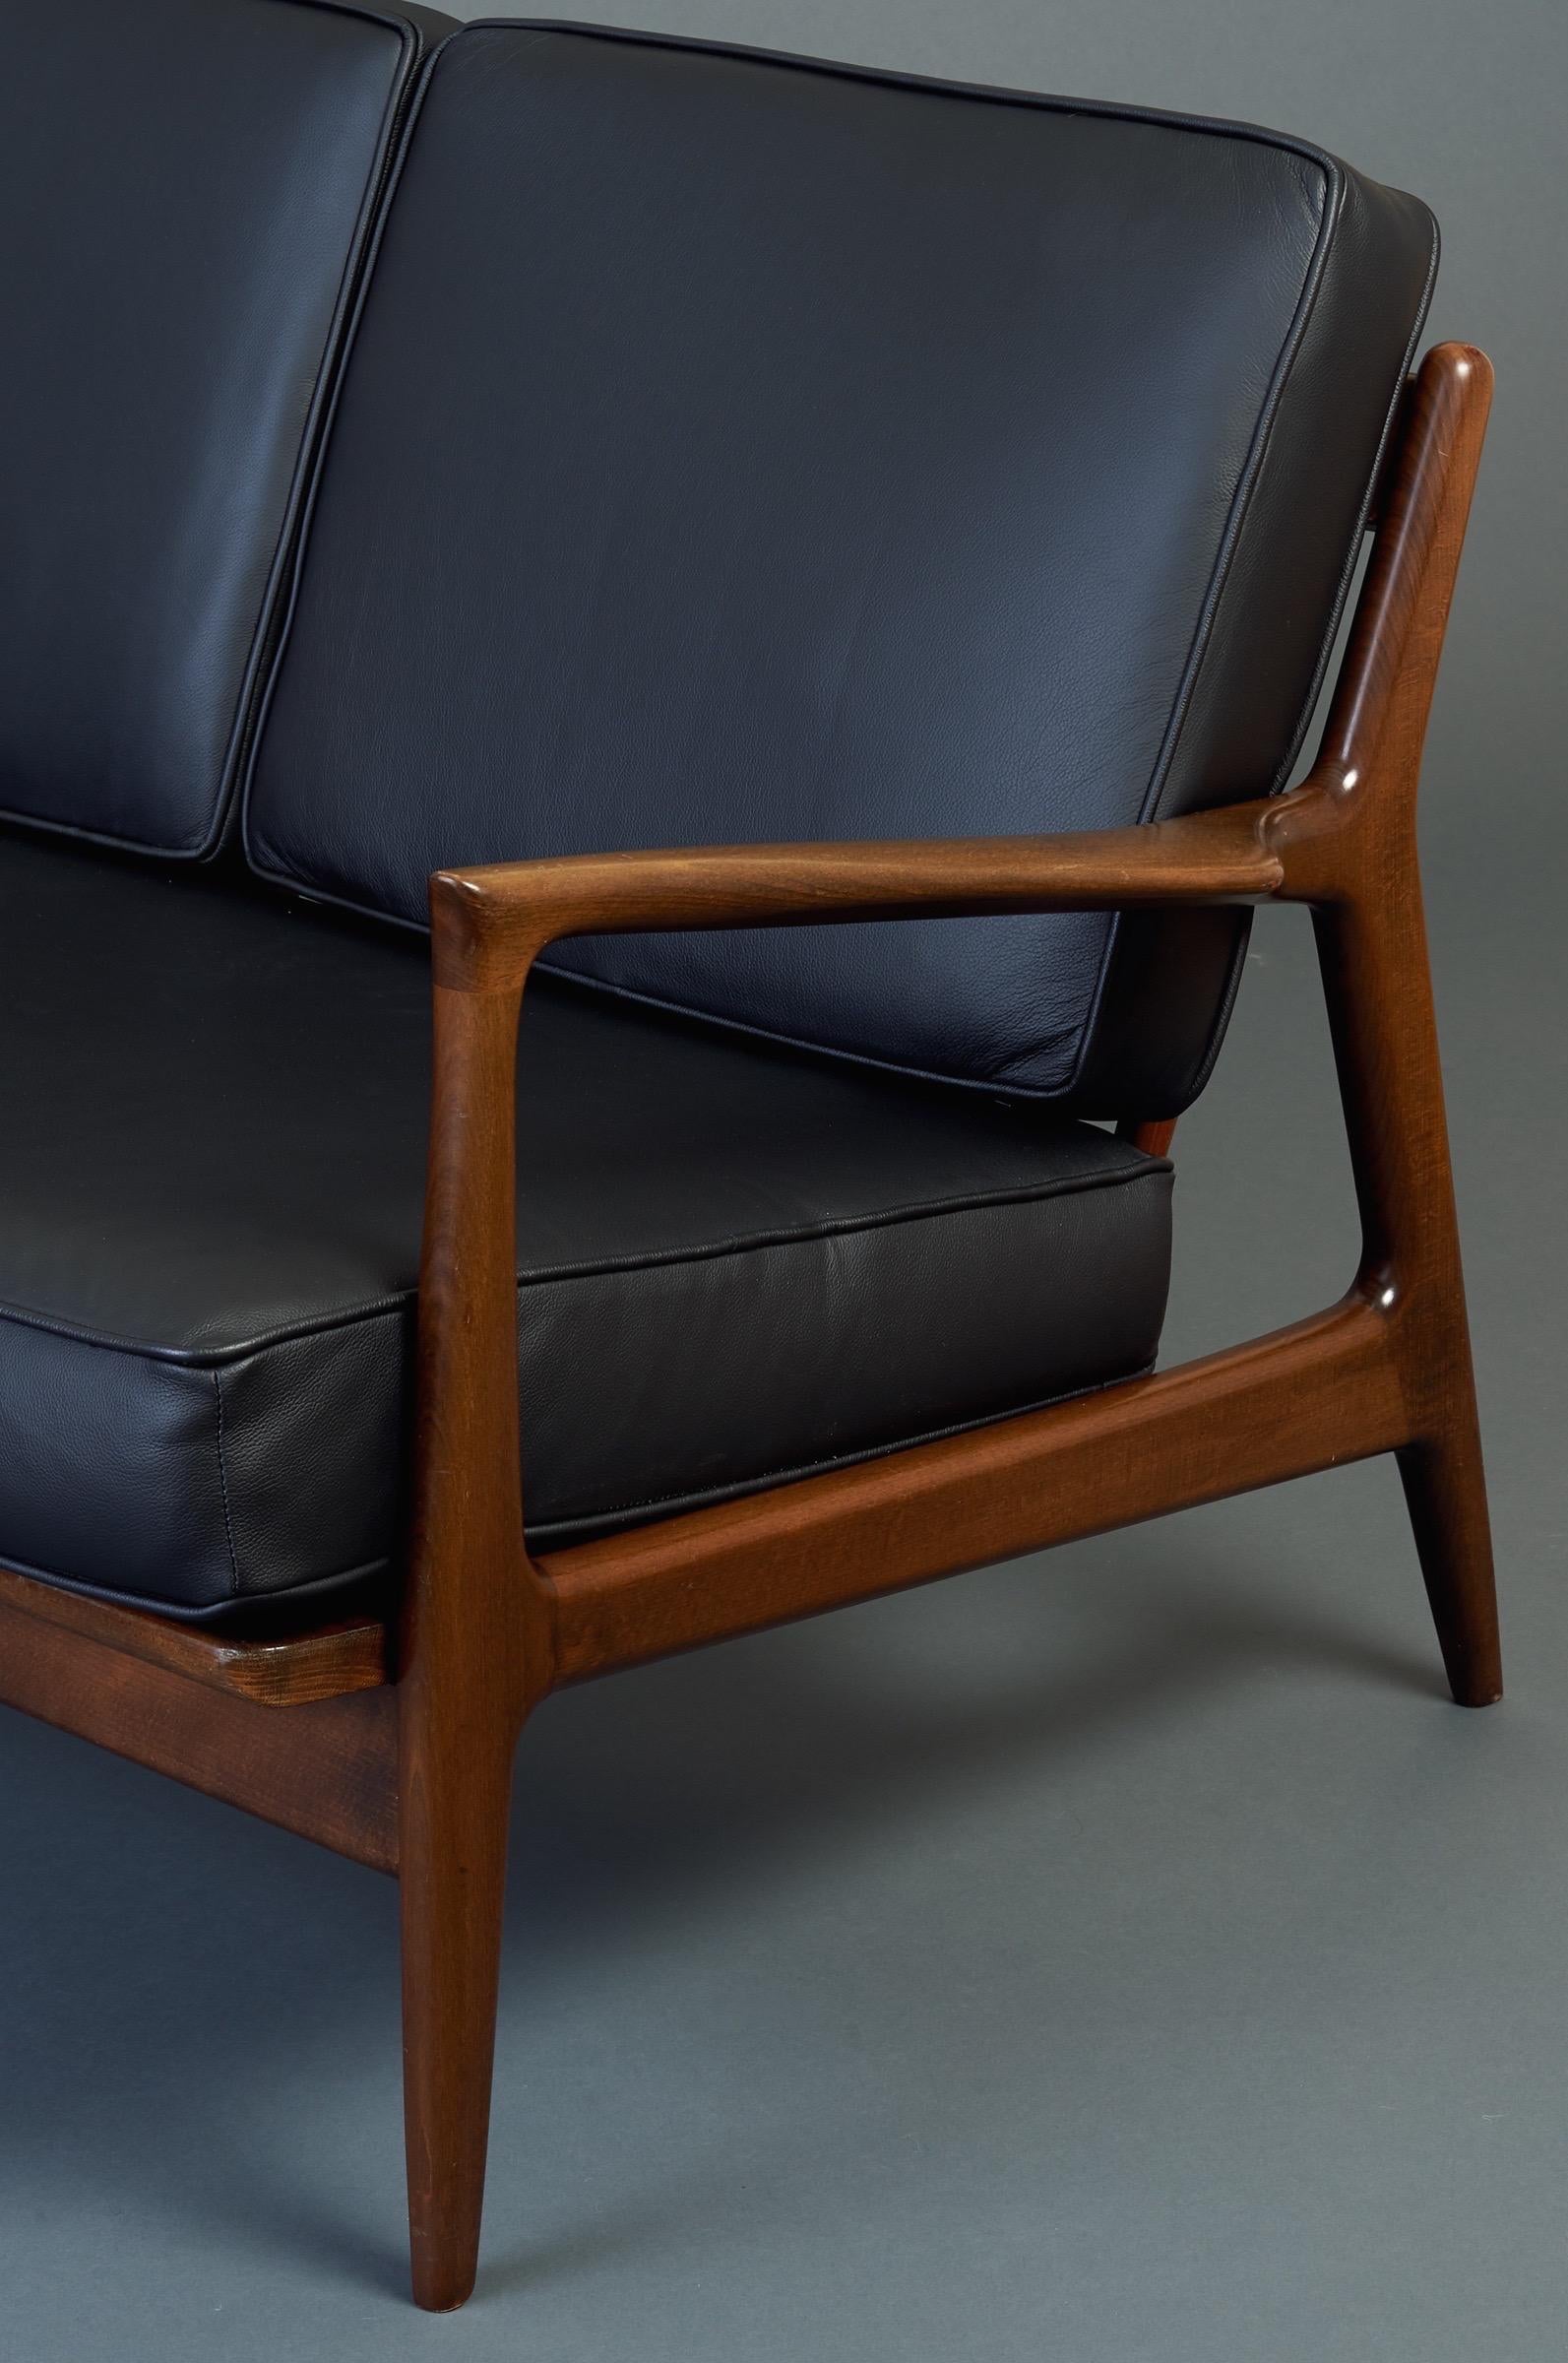 Sleek Danish Modern Sofa by Ib Kofod-Larsen in Teak and Black Leather, 1950s For Sale 1